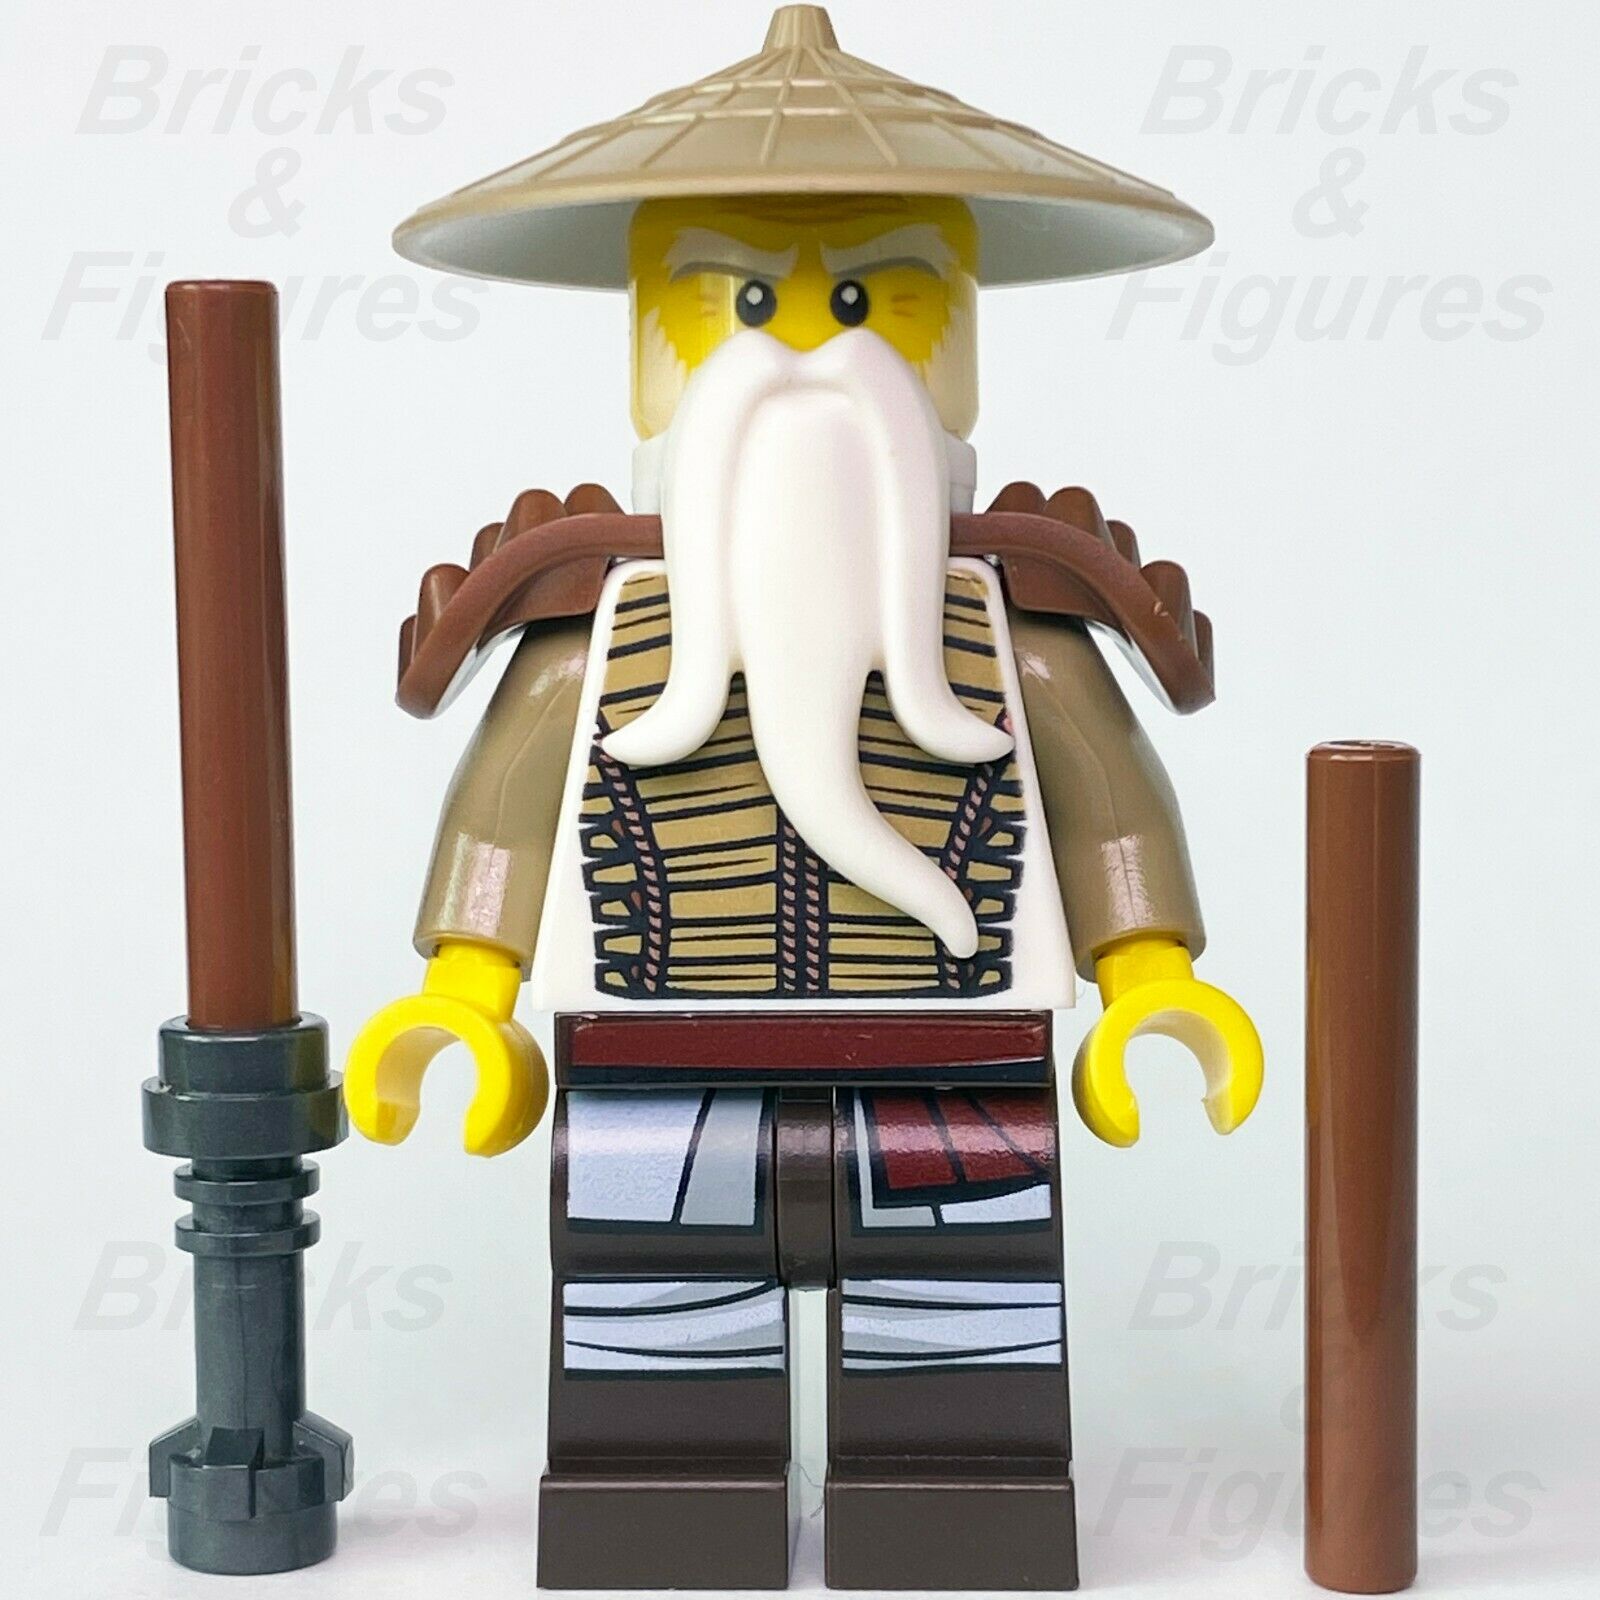 New Ninjago LEGO Hero Wu Ninja Master of the Mountain Minifigure 71718 - Bricks & Figures